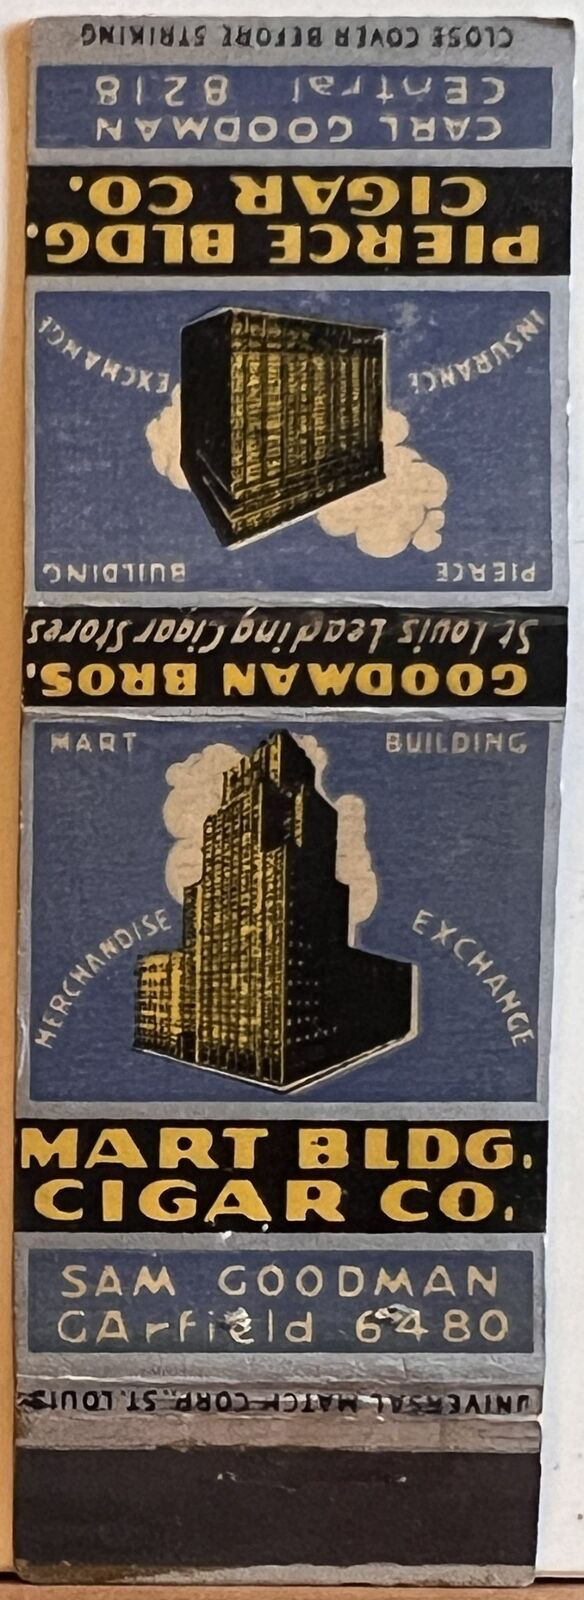 Goodman Bros St Louis MO Missouri Cigar Stores Vintage Matchbook Cover